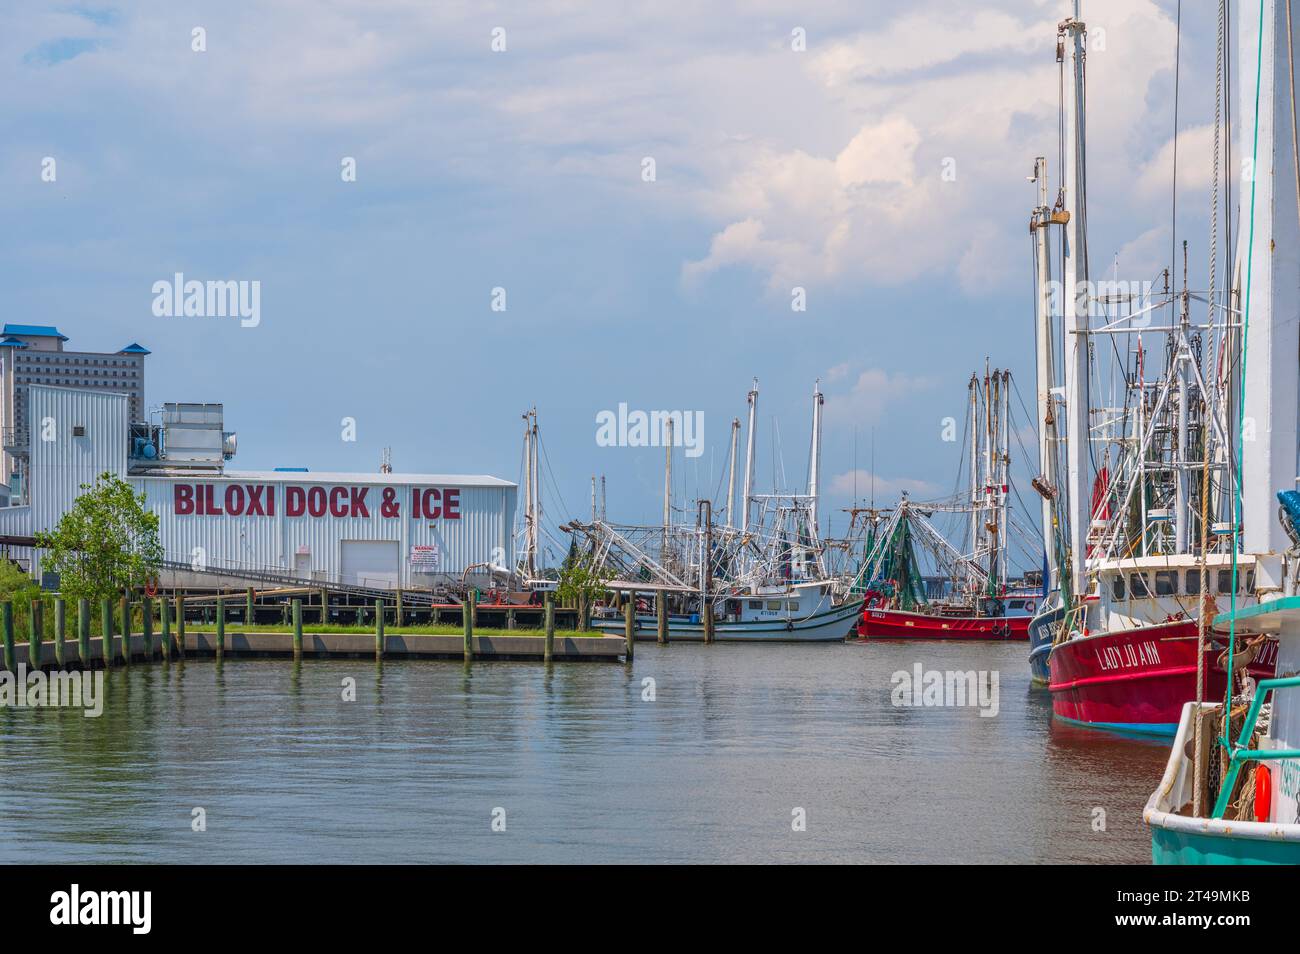 Shrimp boats at Biloxi Dock and Ice, Mississippi Gulf Coast, USA. Stock Photo